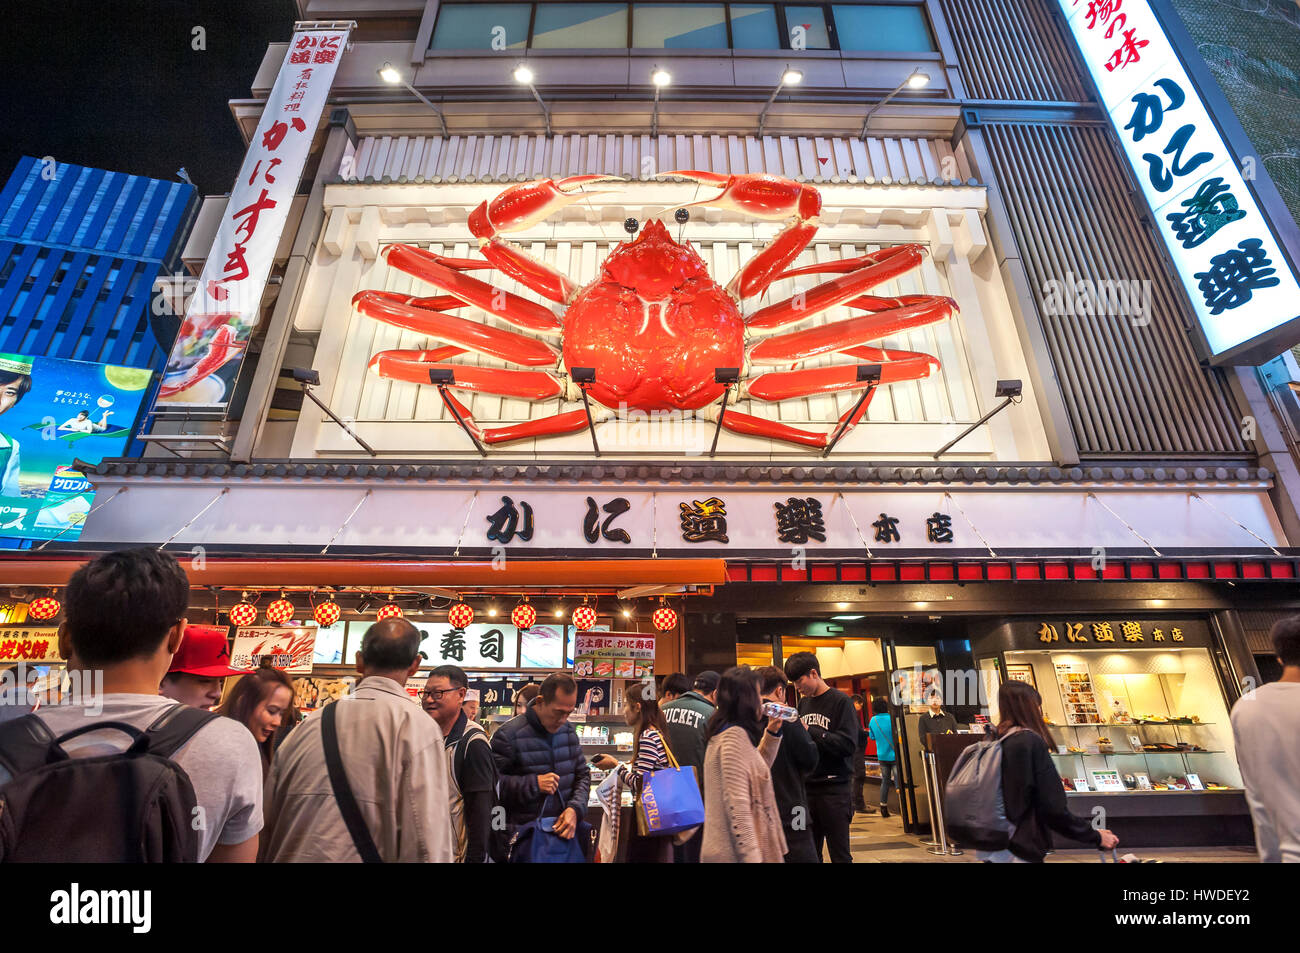 The famous crab sign outside the Kani Doraku crab restaurant in the Dotonbori district in Osaka, Japan Stock Photo